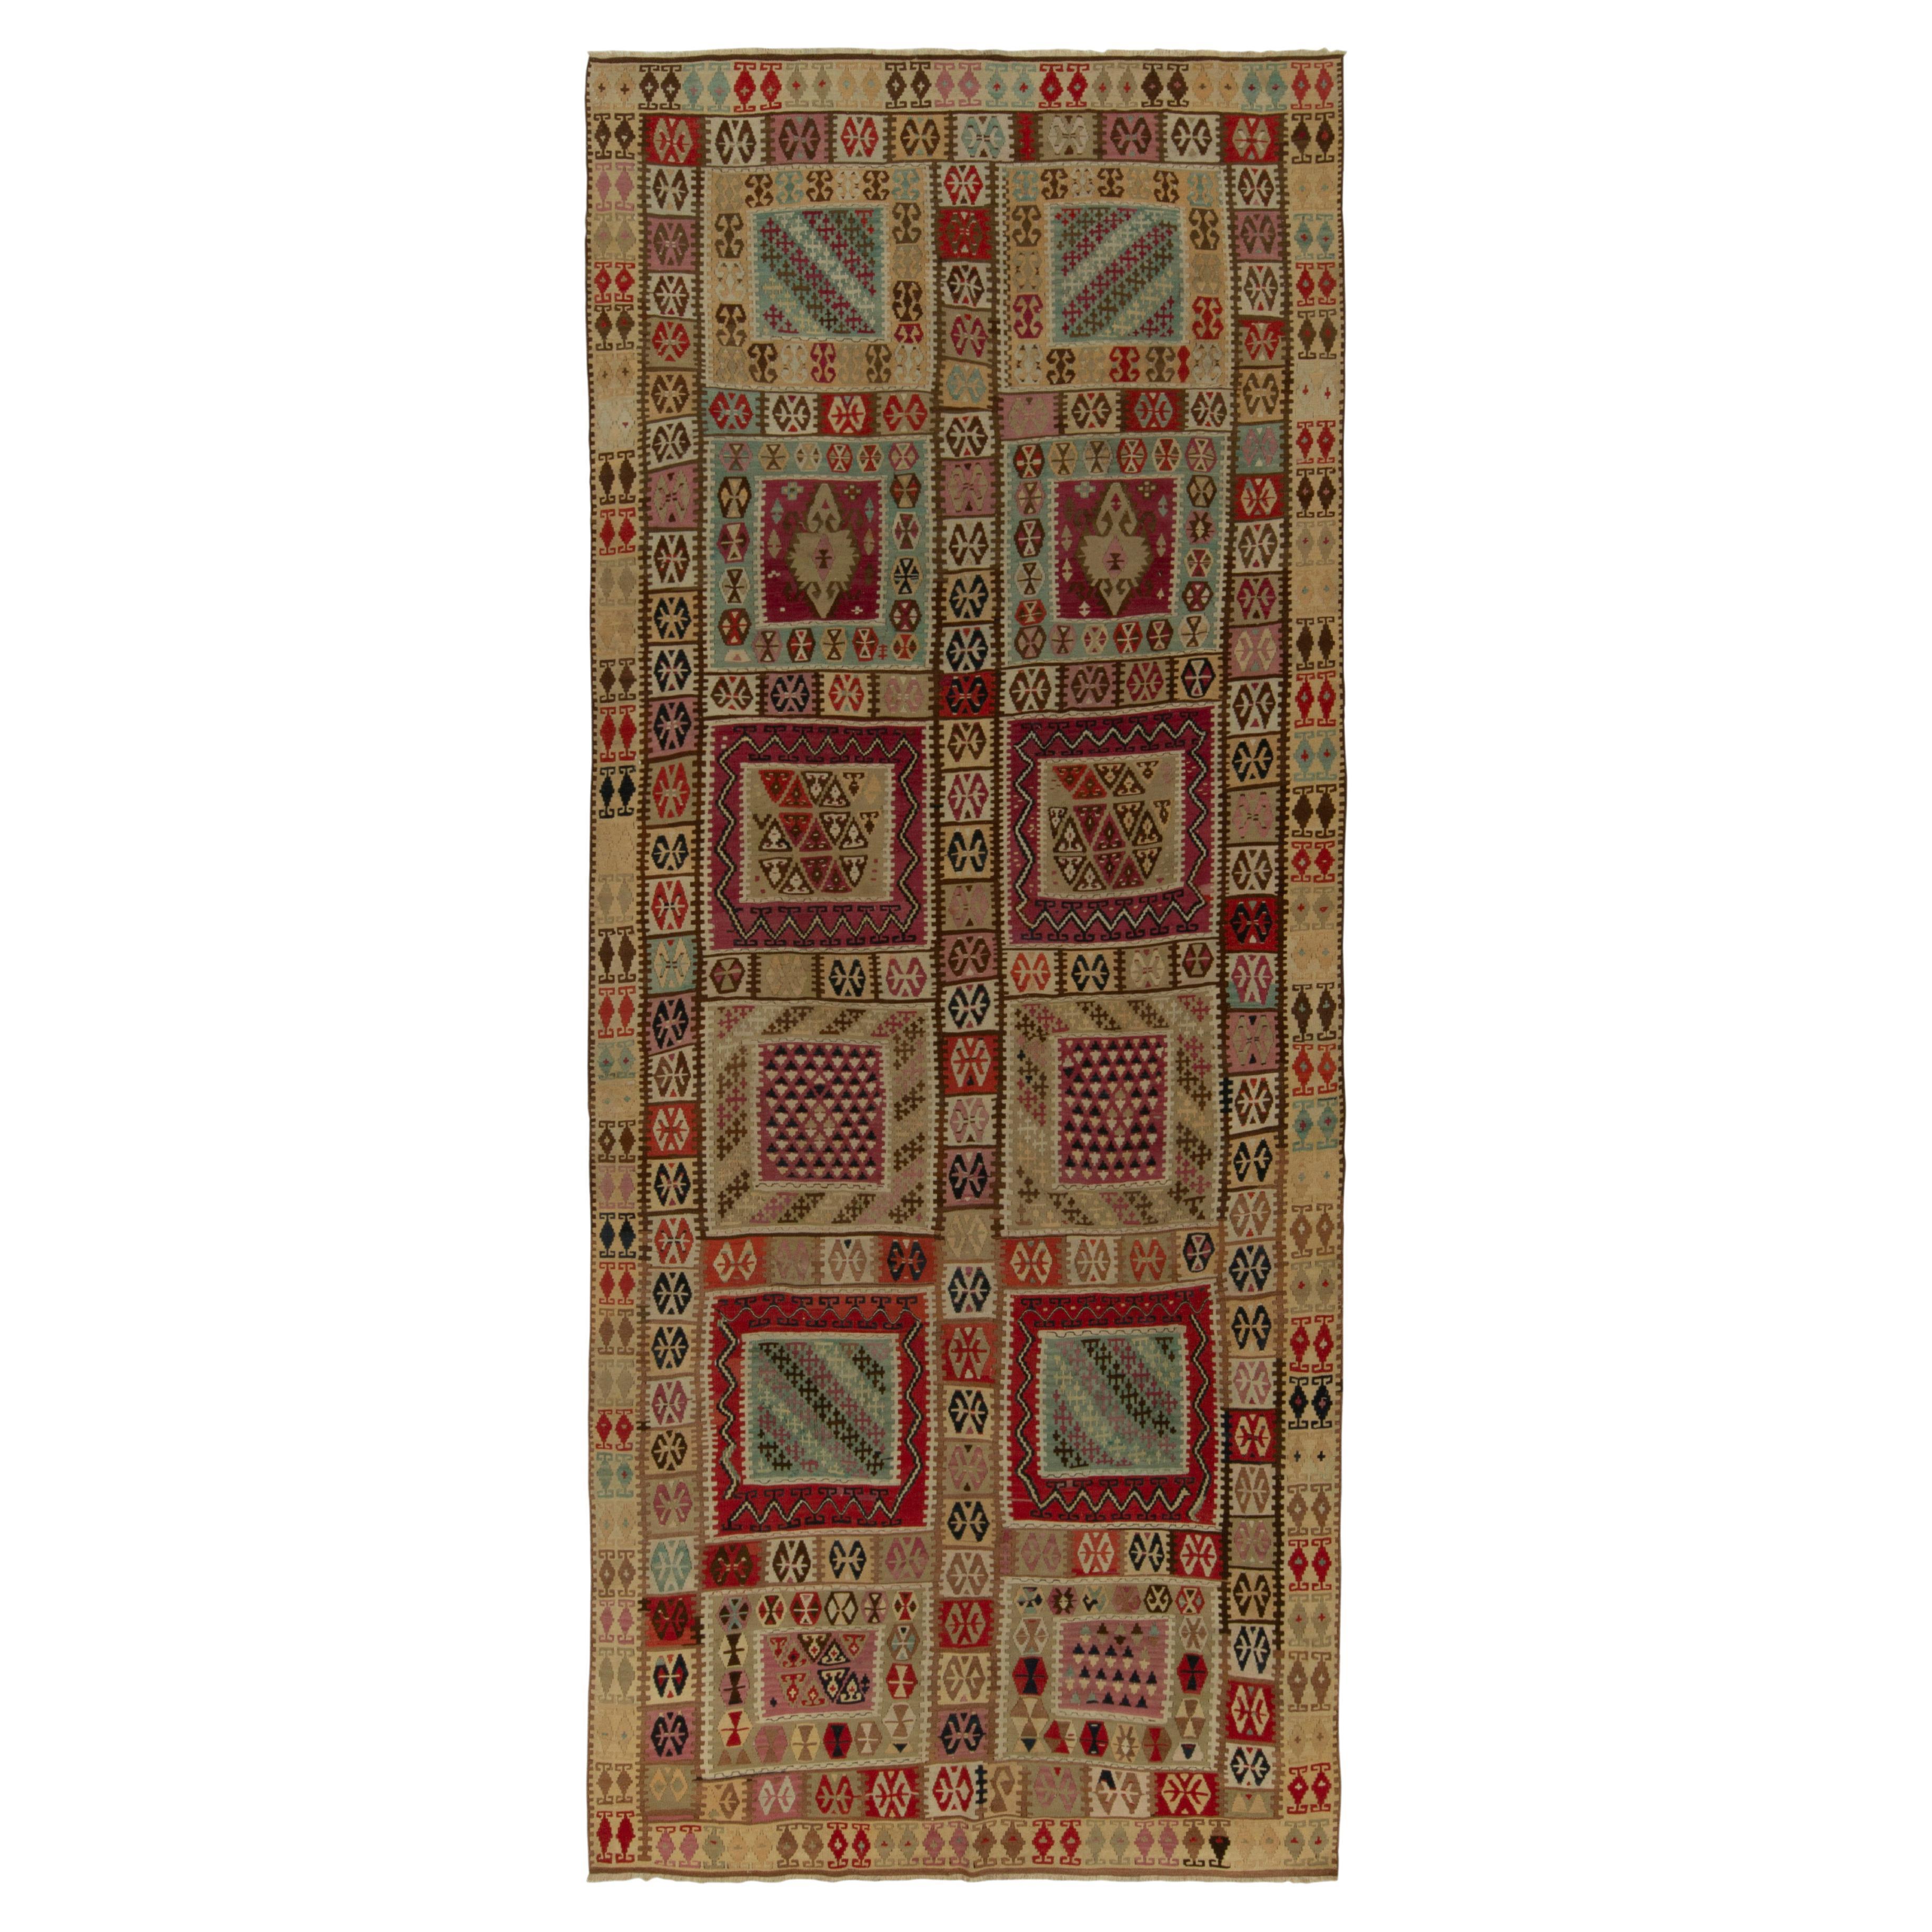 Vintage Mid-Century Tribal Kilim in Multicolor Geometric Patterns by Rug & Kilim